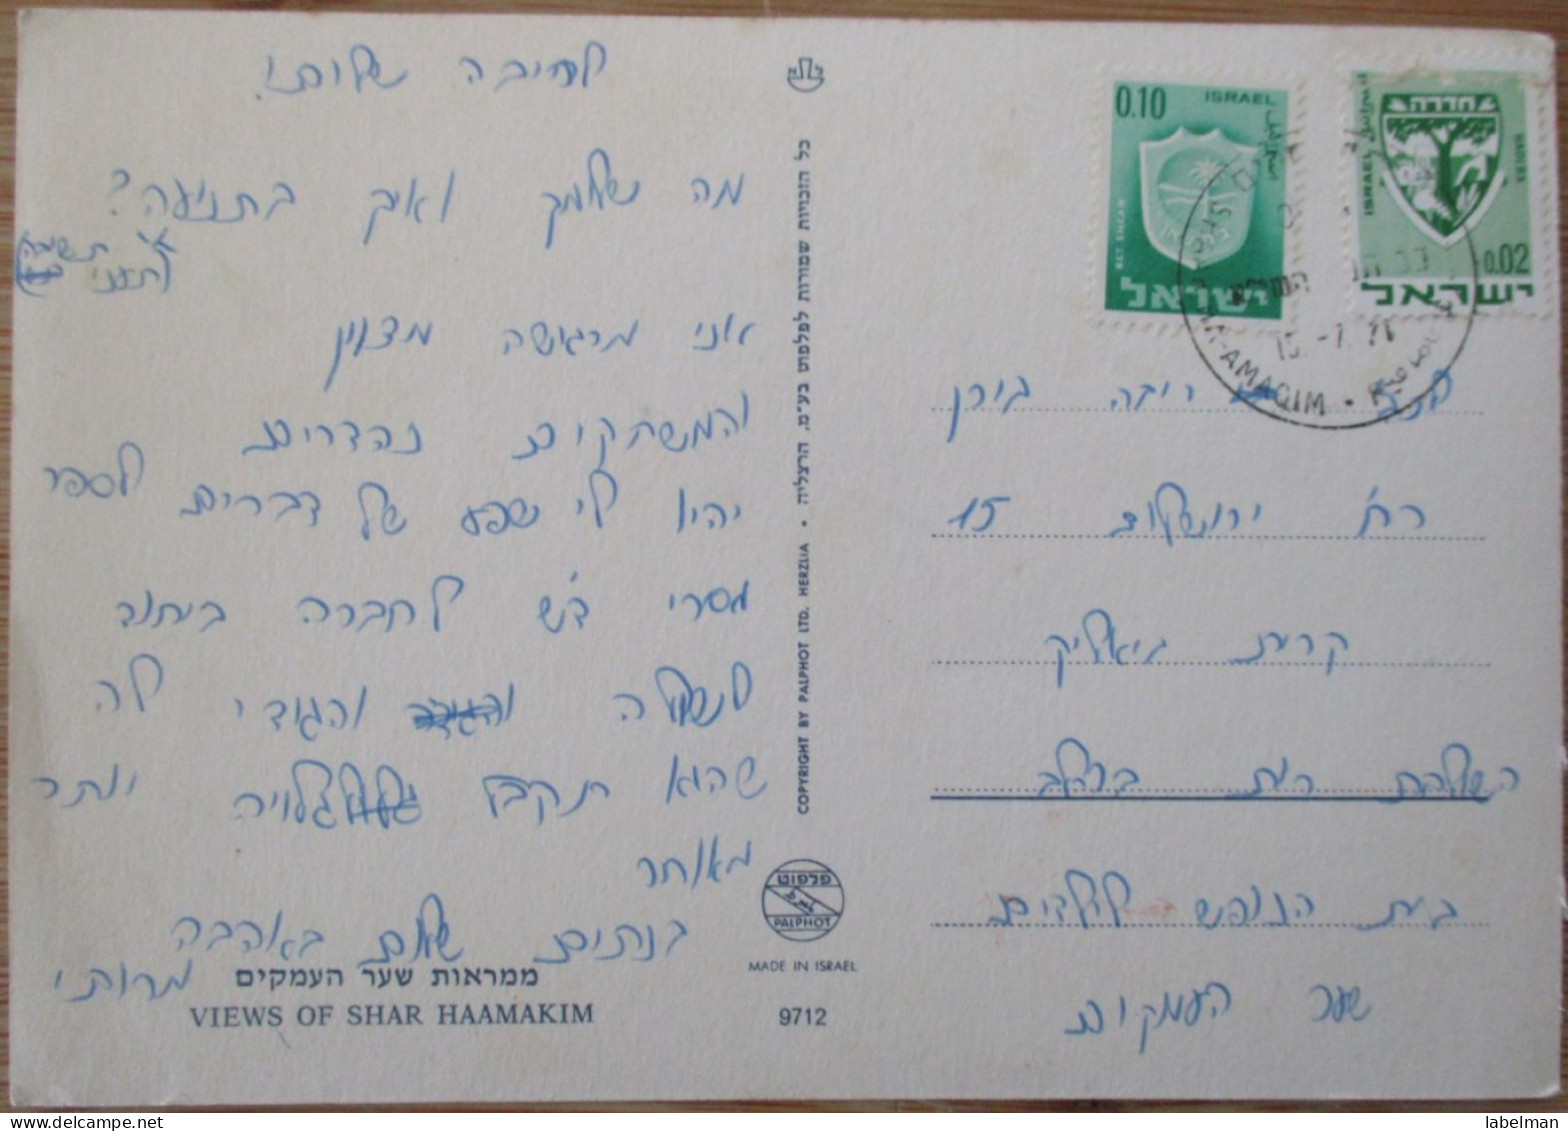 ISRAEL GALILEE TIVON KIBBUTZ SHAAR HAAMAKIM POSTCARD KARTE CARD ANSICHTSKARTE CARTOLINA CARTE POSTALE PC POSTKARTE - Israel